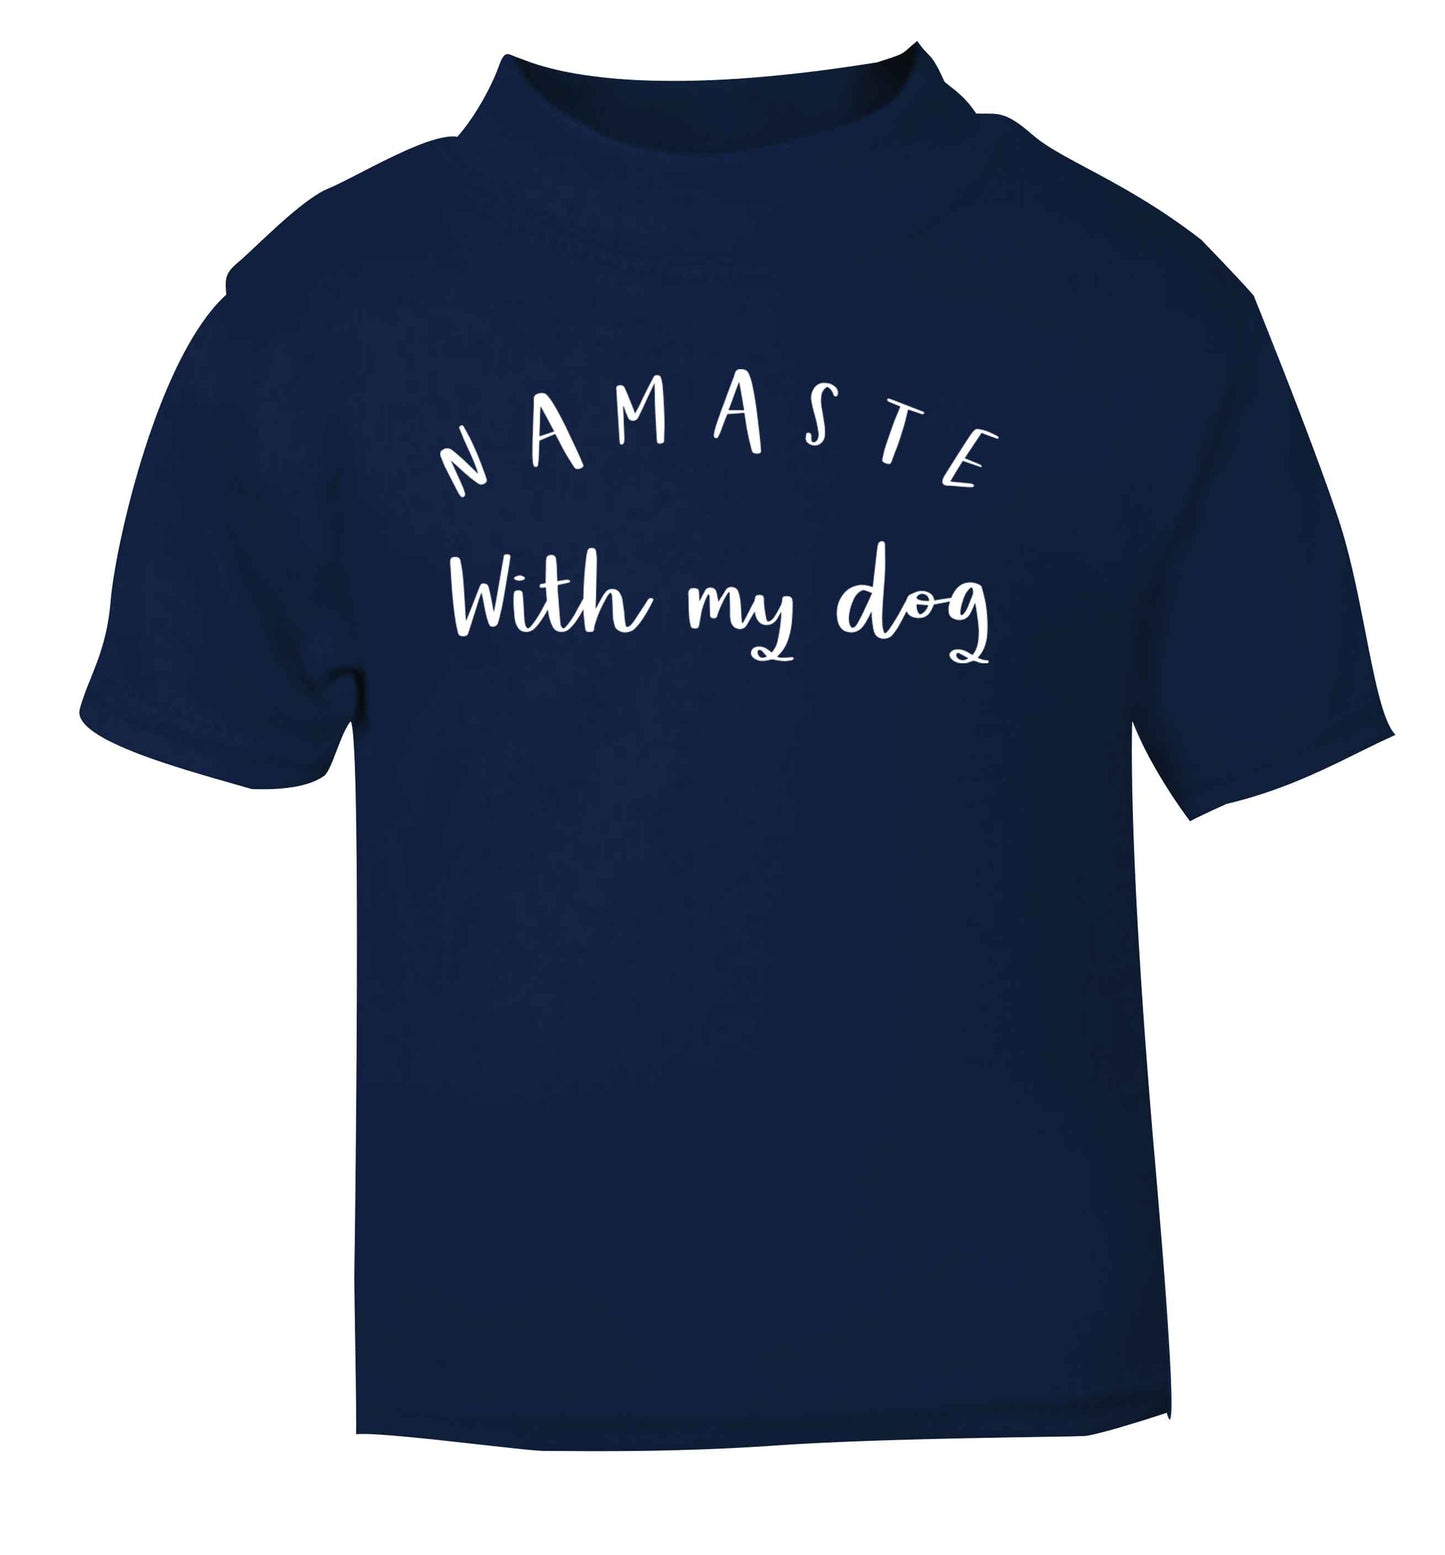 Namaste with my dog navy Baby Toddler Tshirt 2 Years